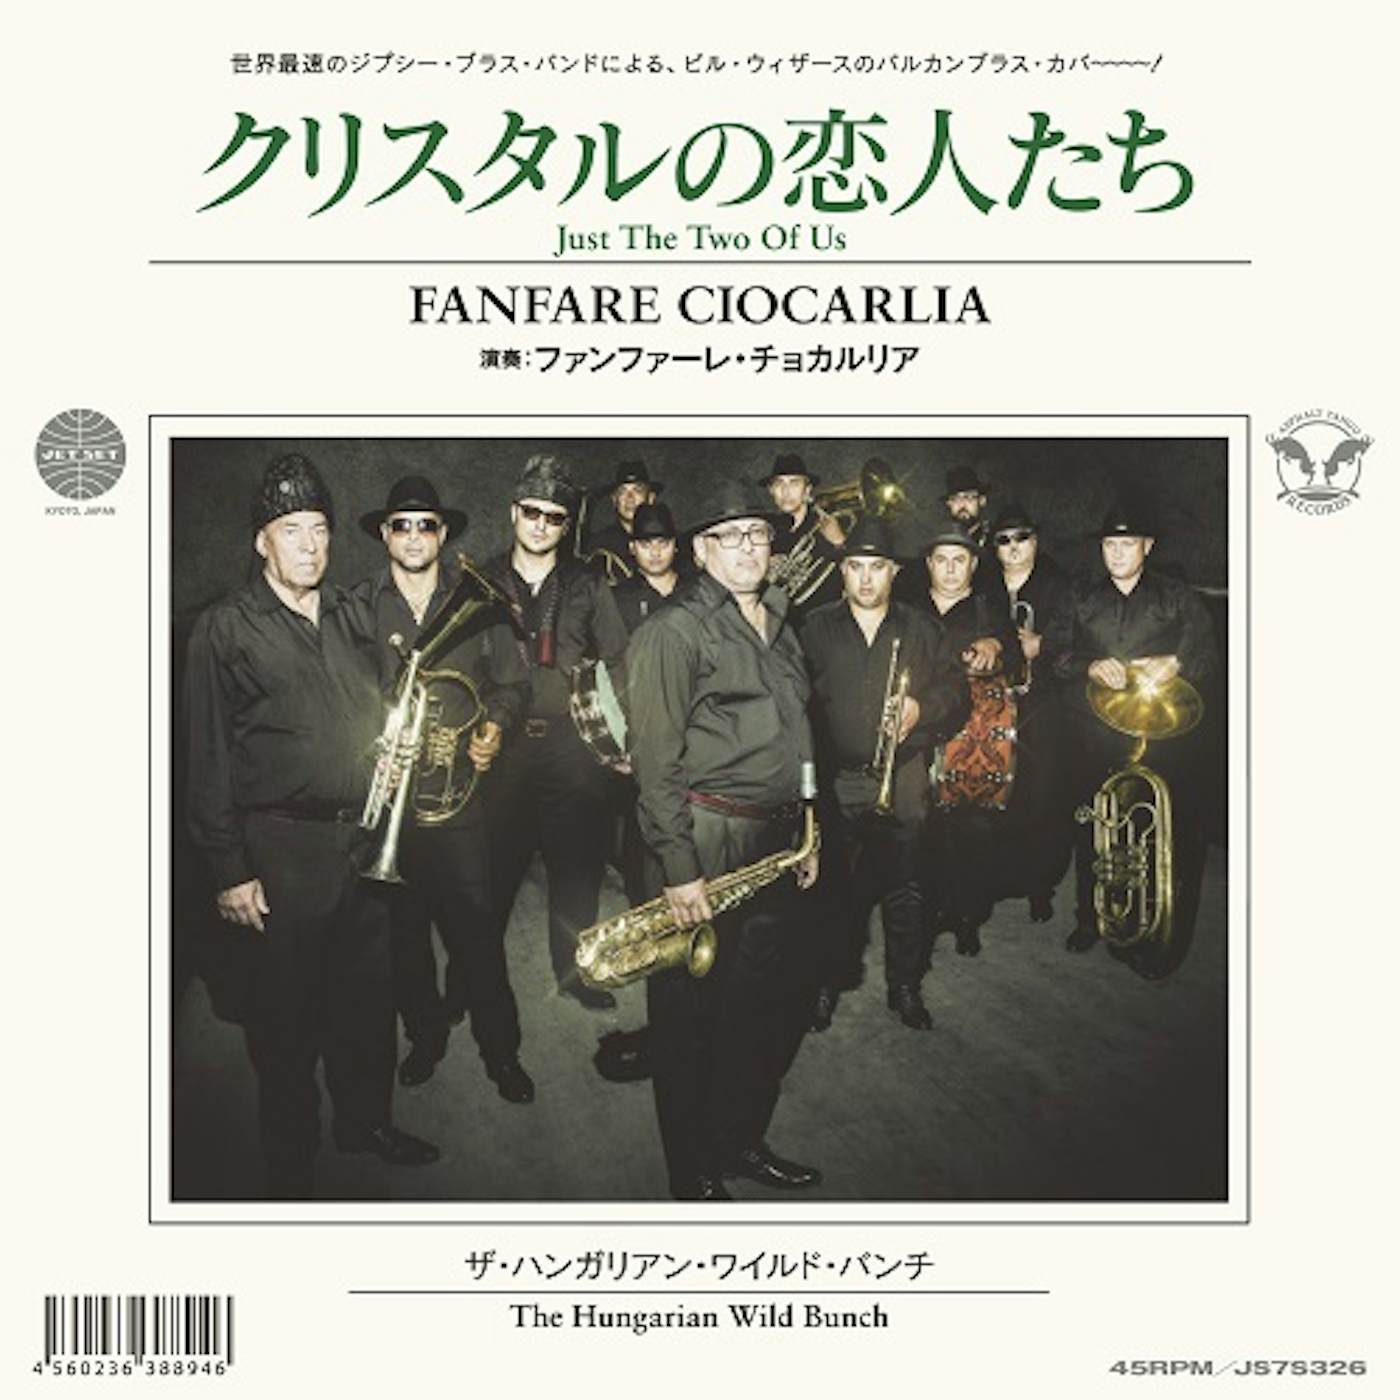 Fanfare Ciocarlia Just The Two Of Us  Japanese Import  Li Vinyl Record